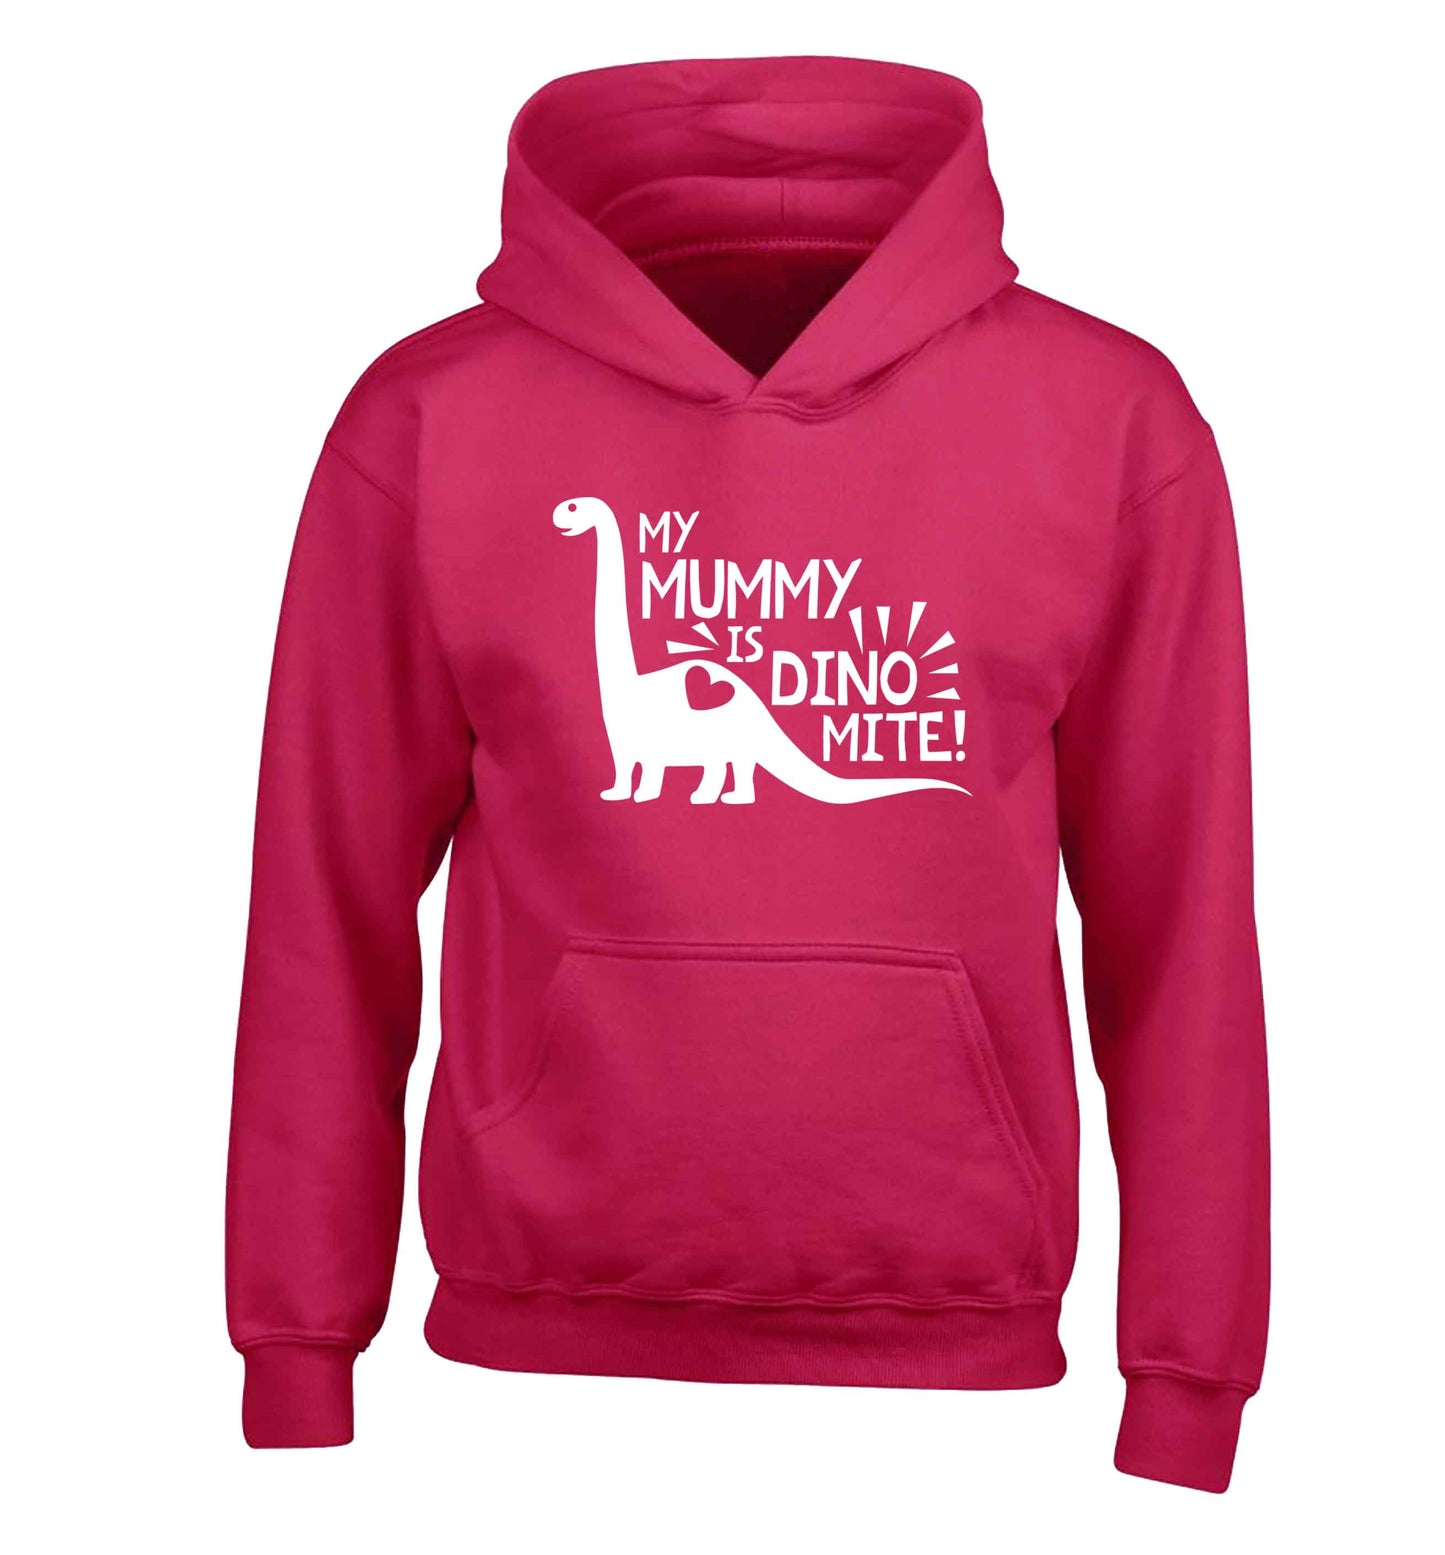 My mummy is dinomite children's pink hoodie 12-13 Years